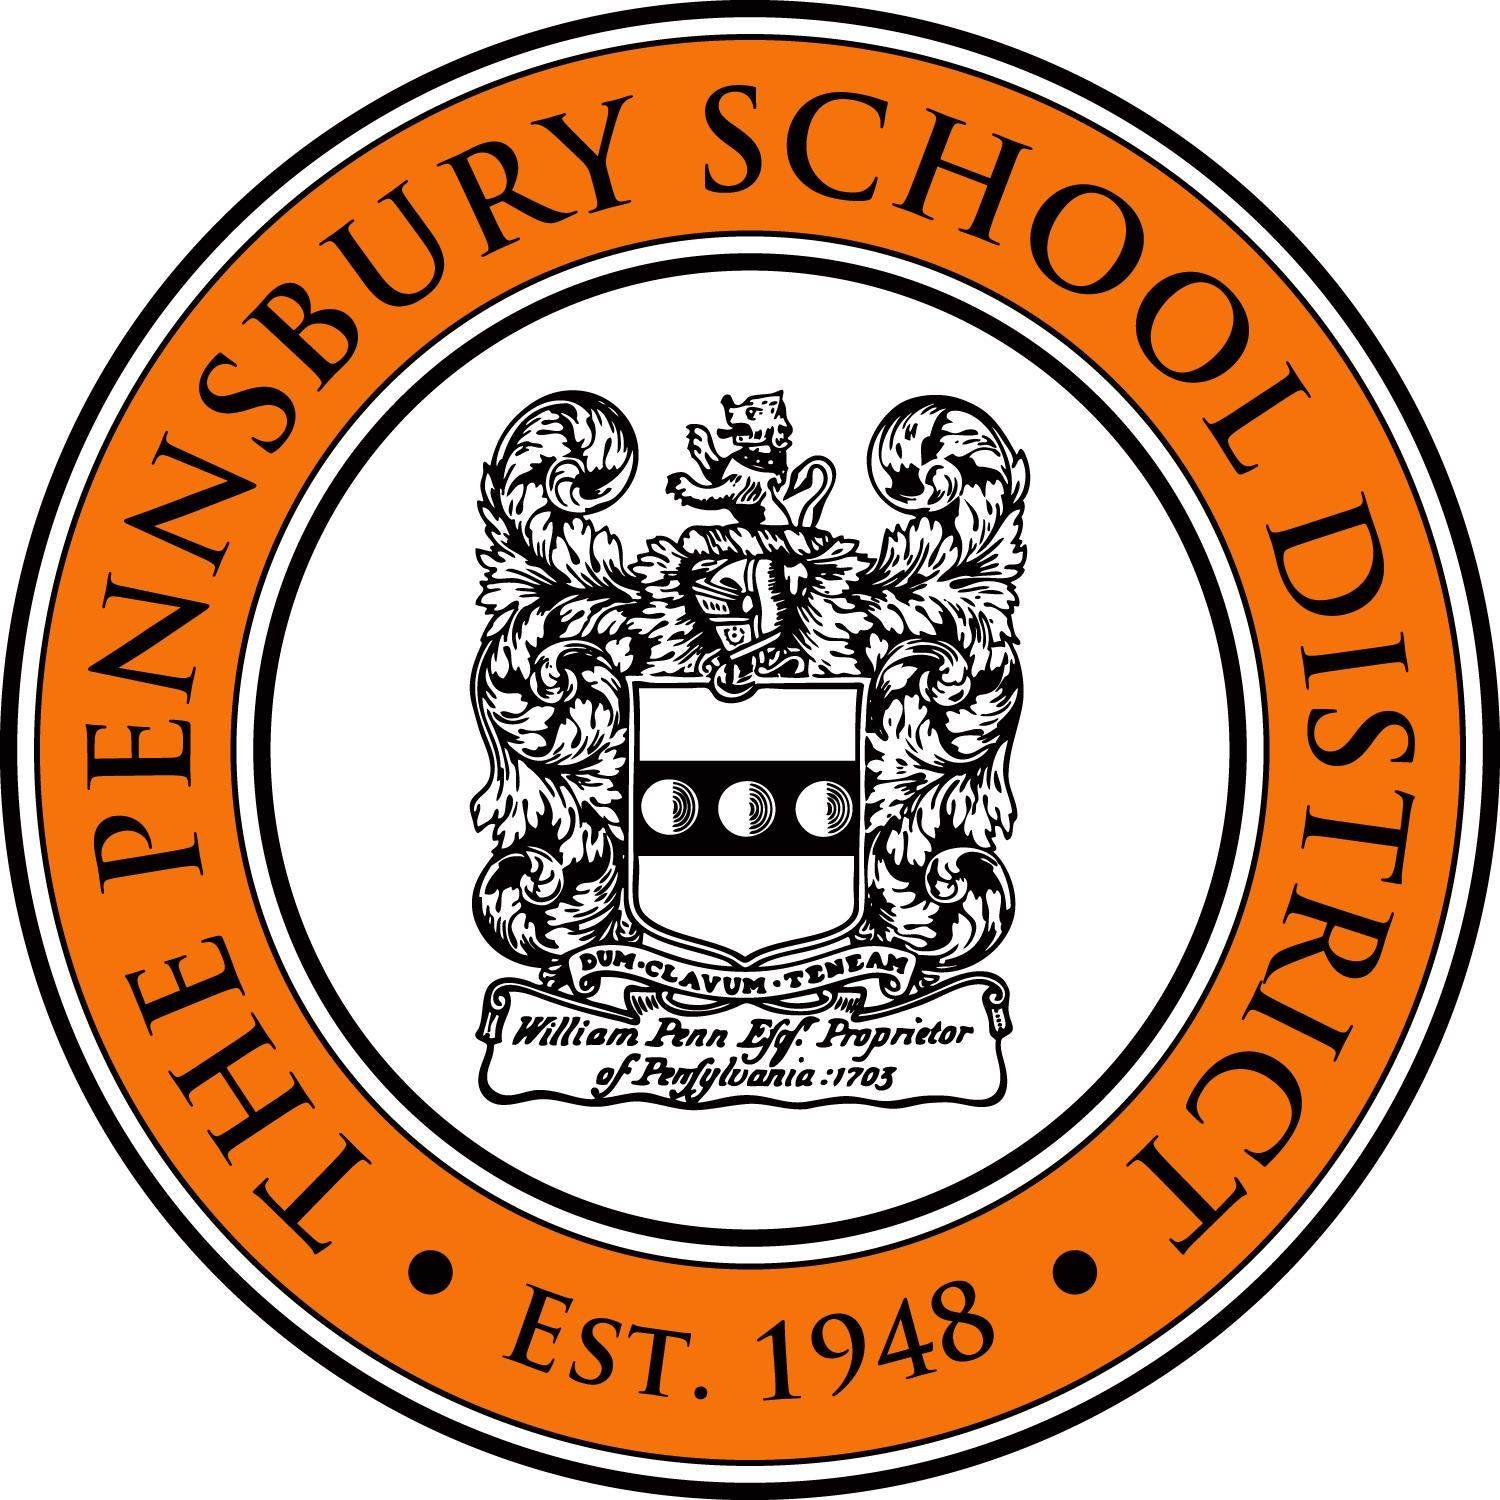 pennsbury school district homework policy